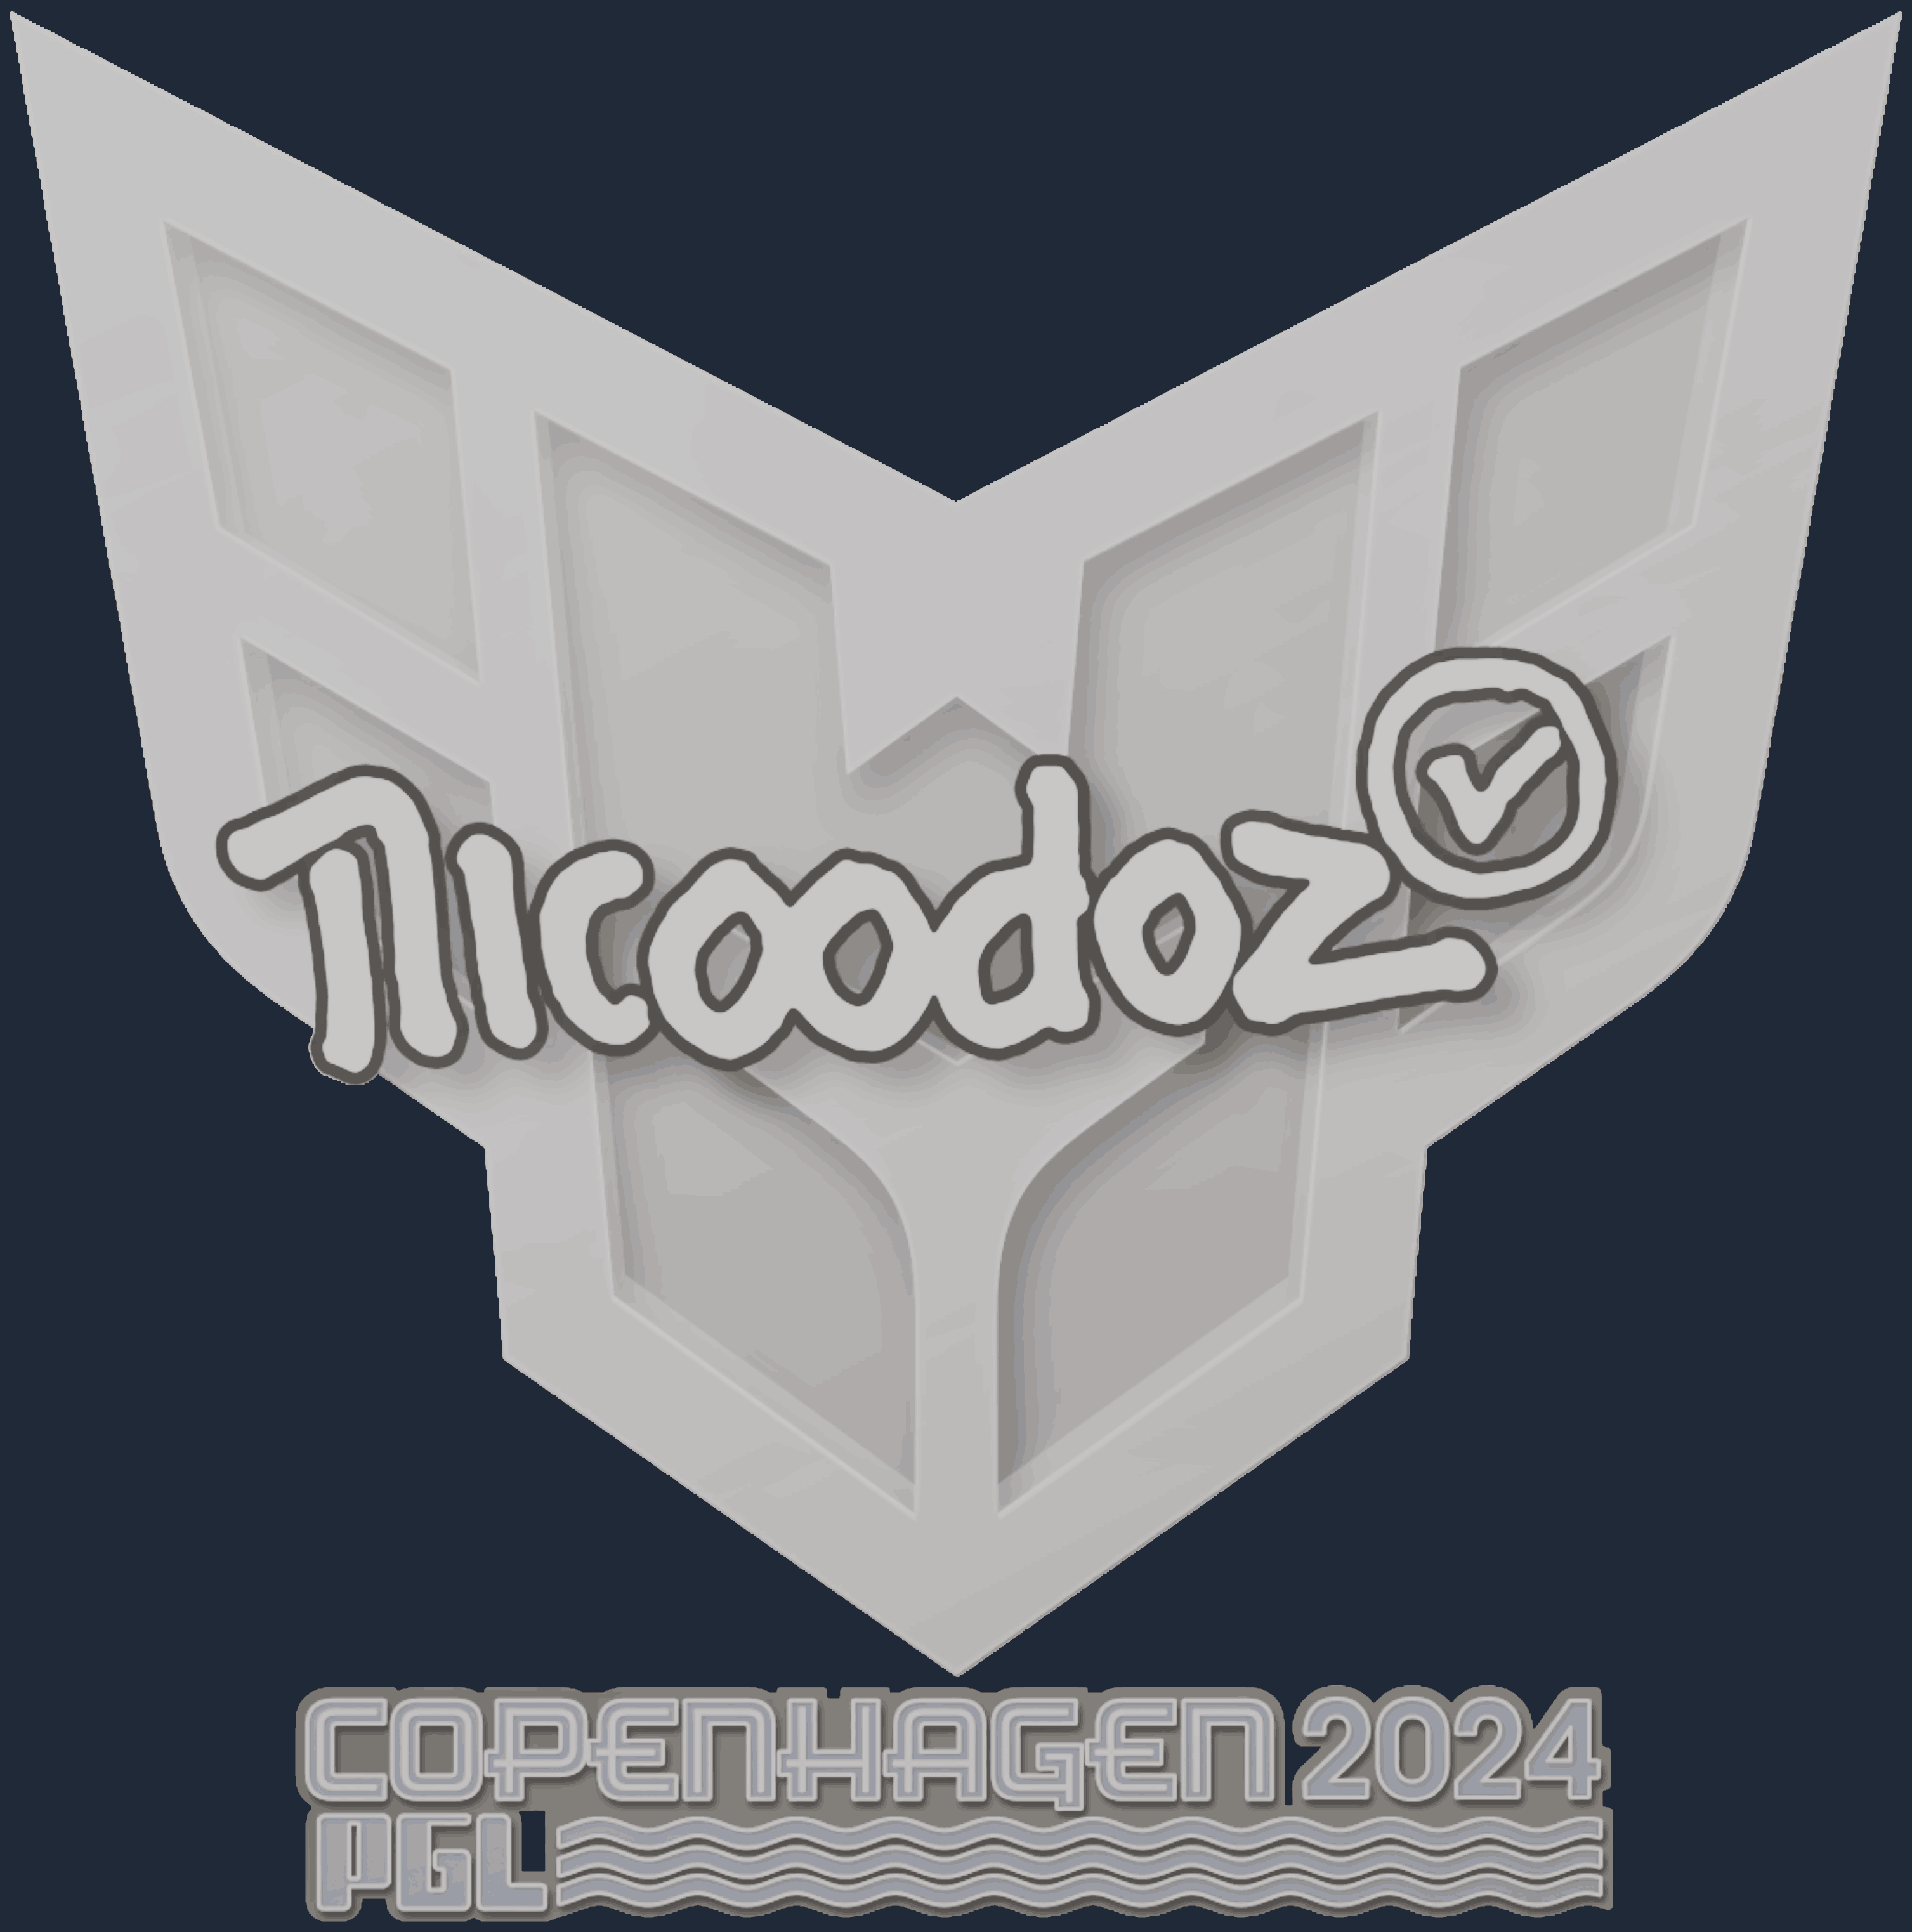 Sticker | nicoodoz | Copenhagen 2024 Screenshot